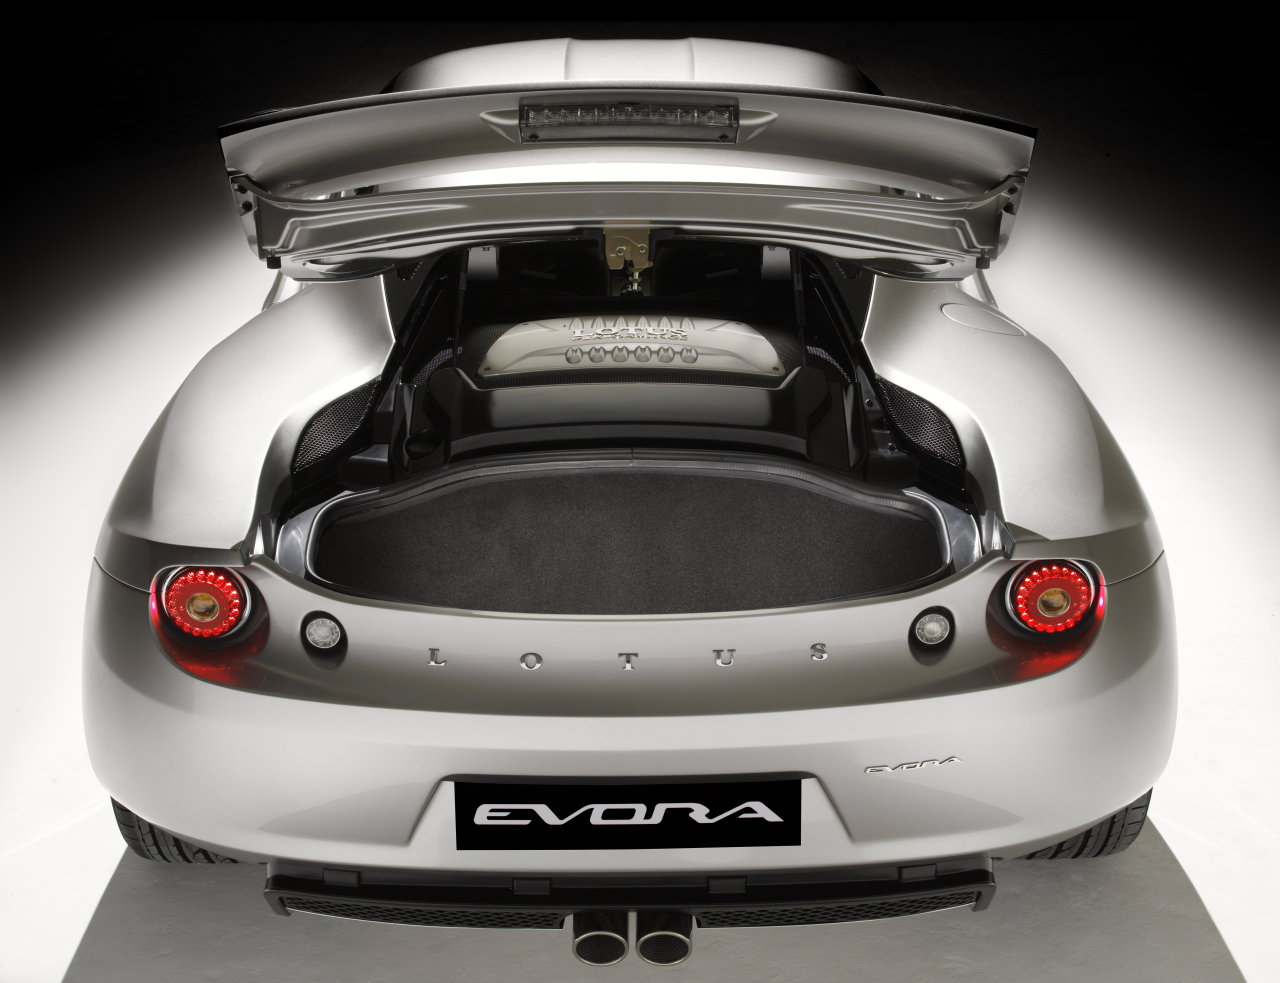 Cars Today: Lotus Evora